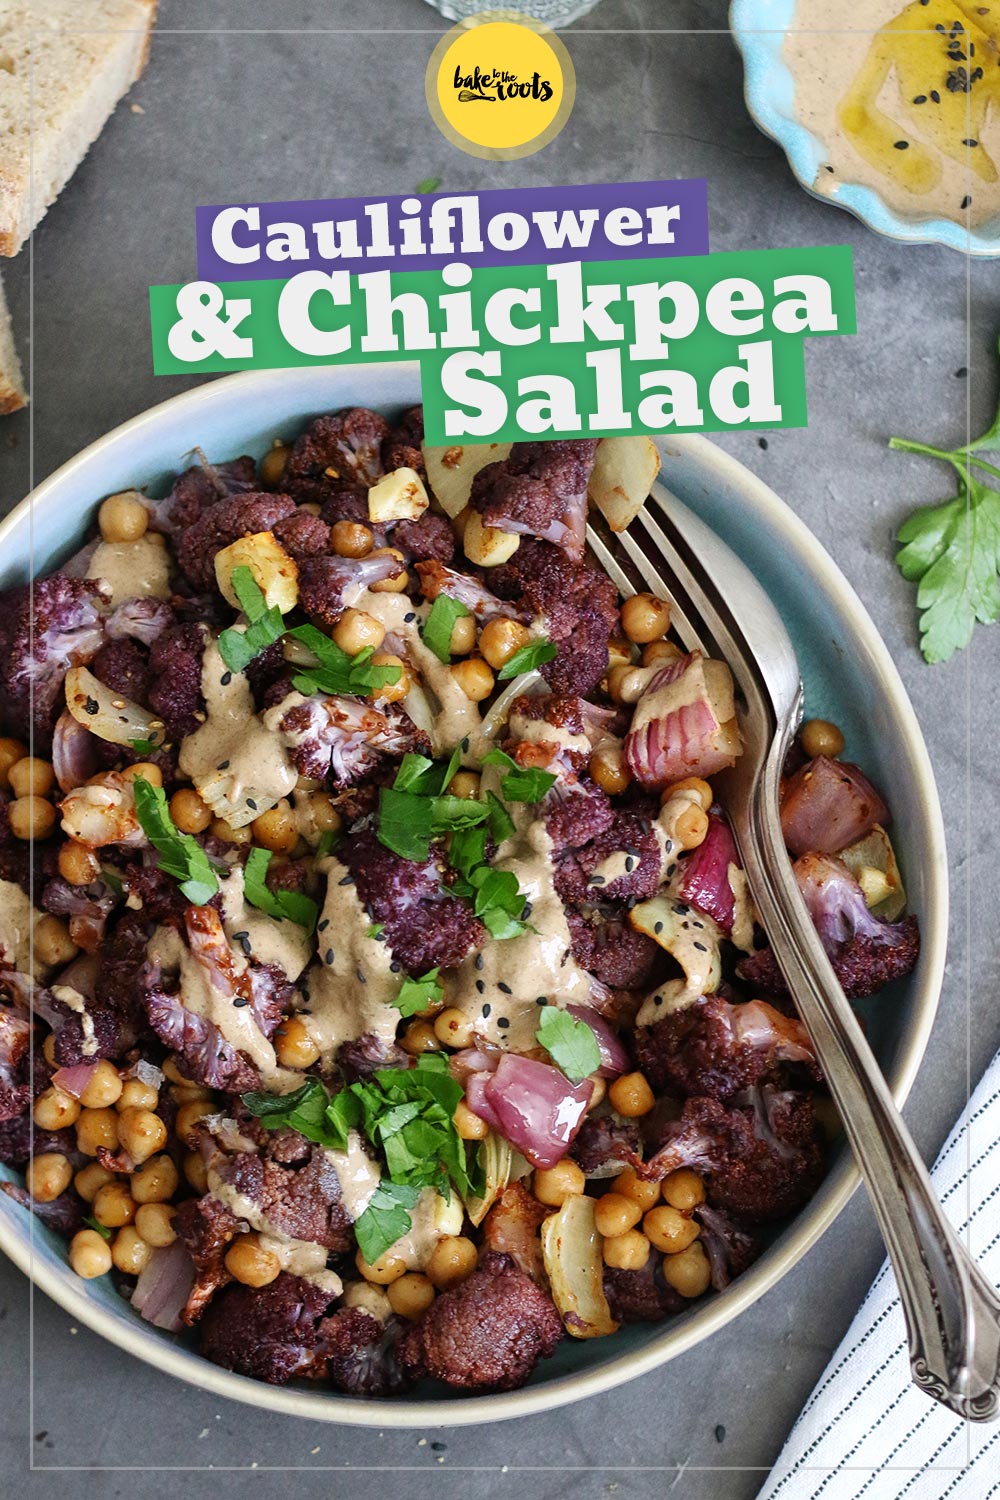 Roasted Harissa Cauliflower & Chickpea Salad | Bake to the roots